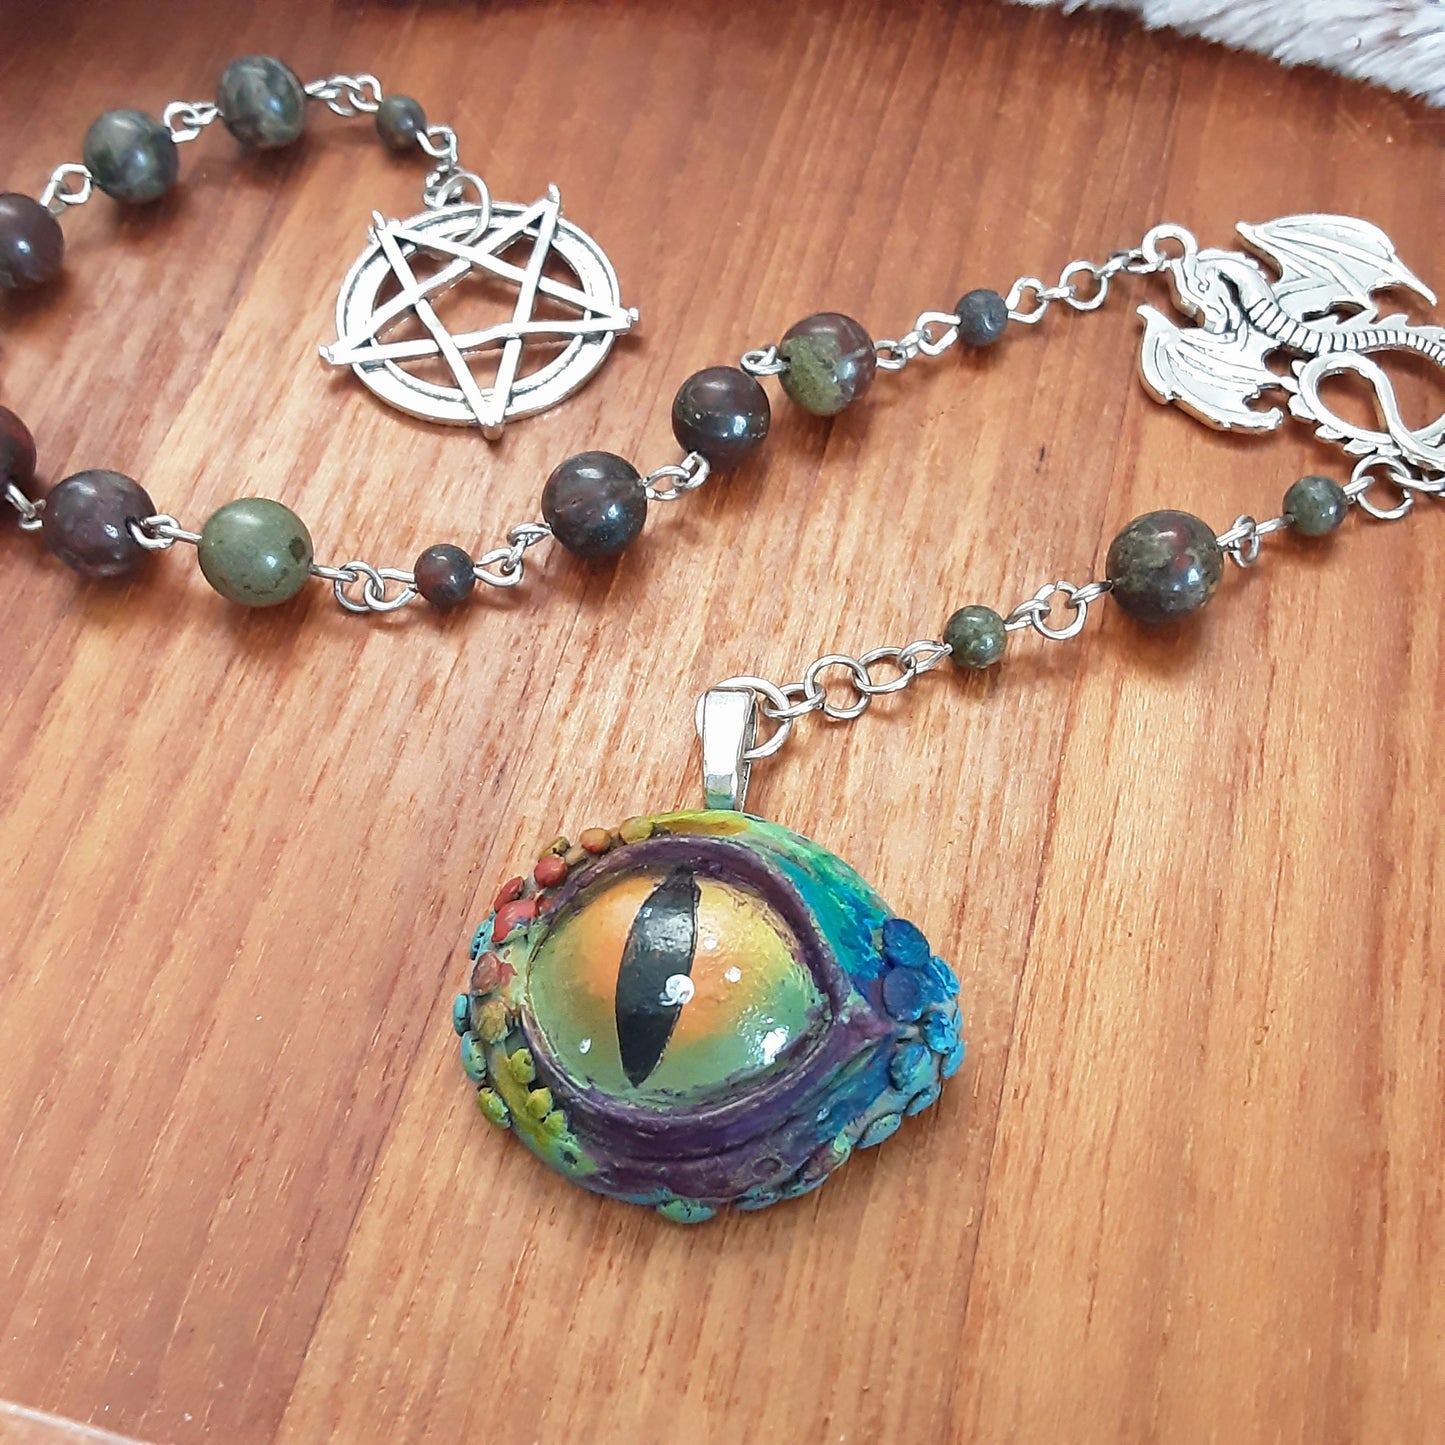 Draconic prayer beads